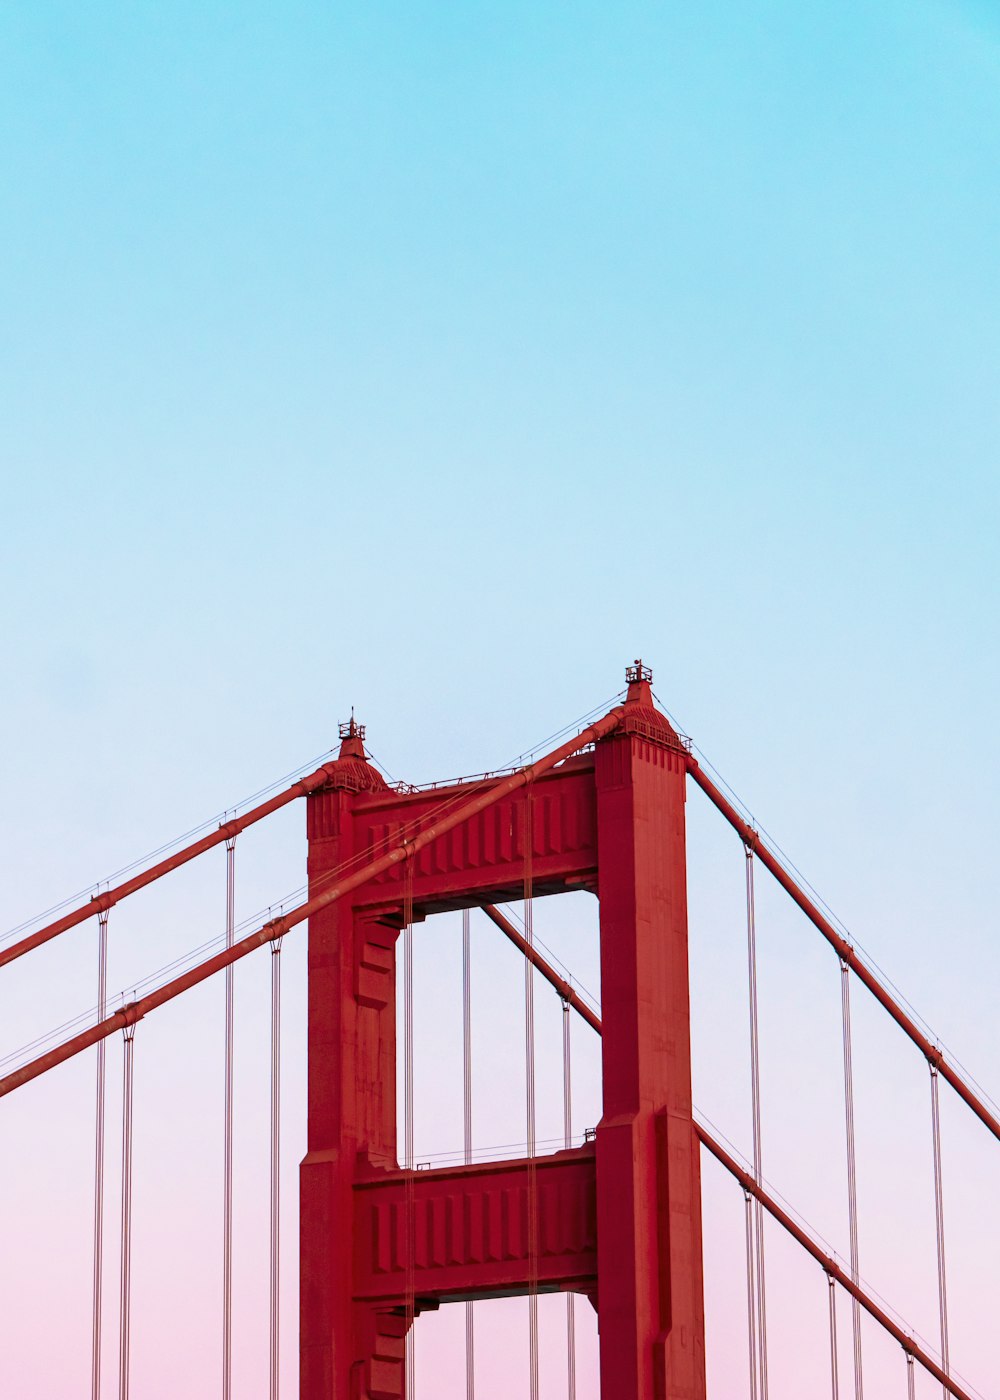 Golden Gate Bridge under a calm blue sky